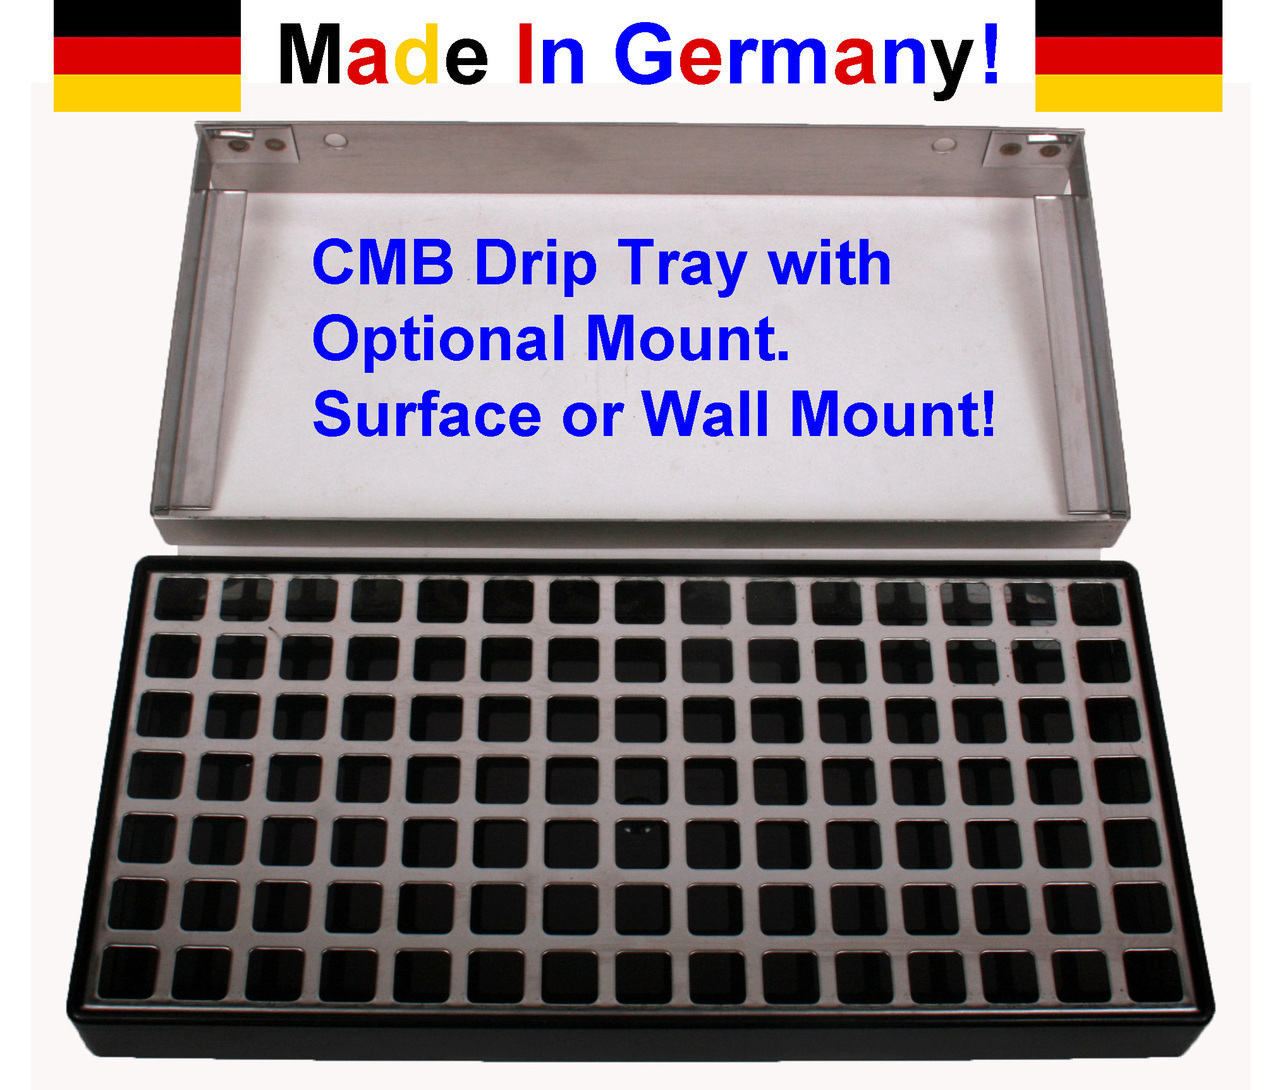 12" X 5" X 1 1/4 " Deep Drip Tray - CMB of Germany